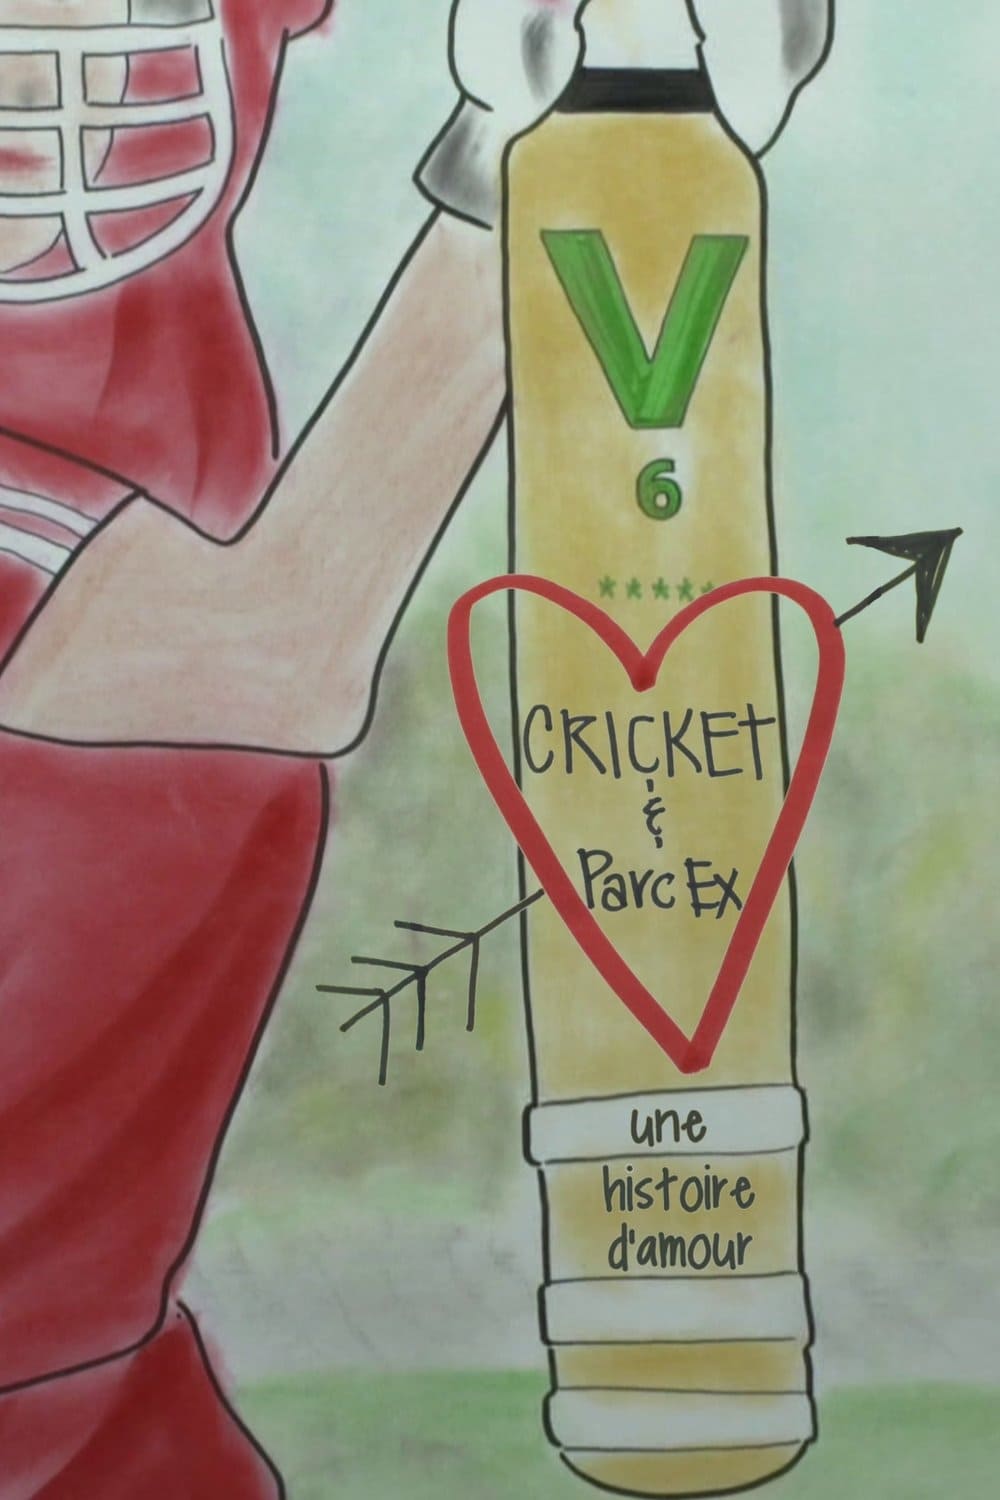 Cricket & Park-Ex: a love story